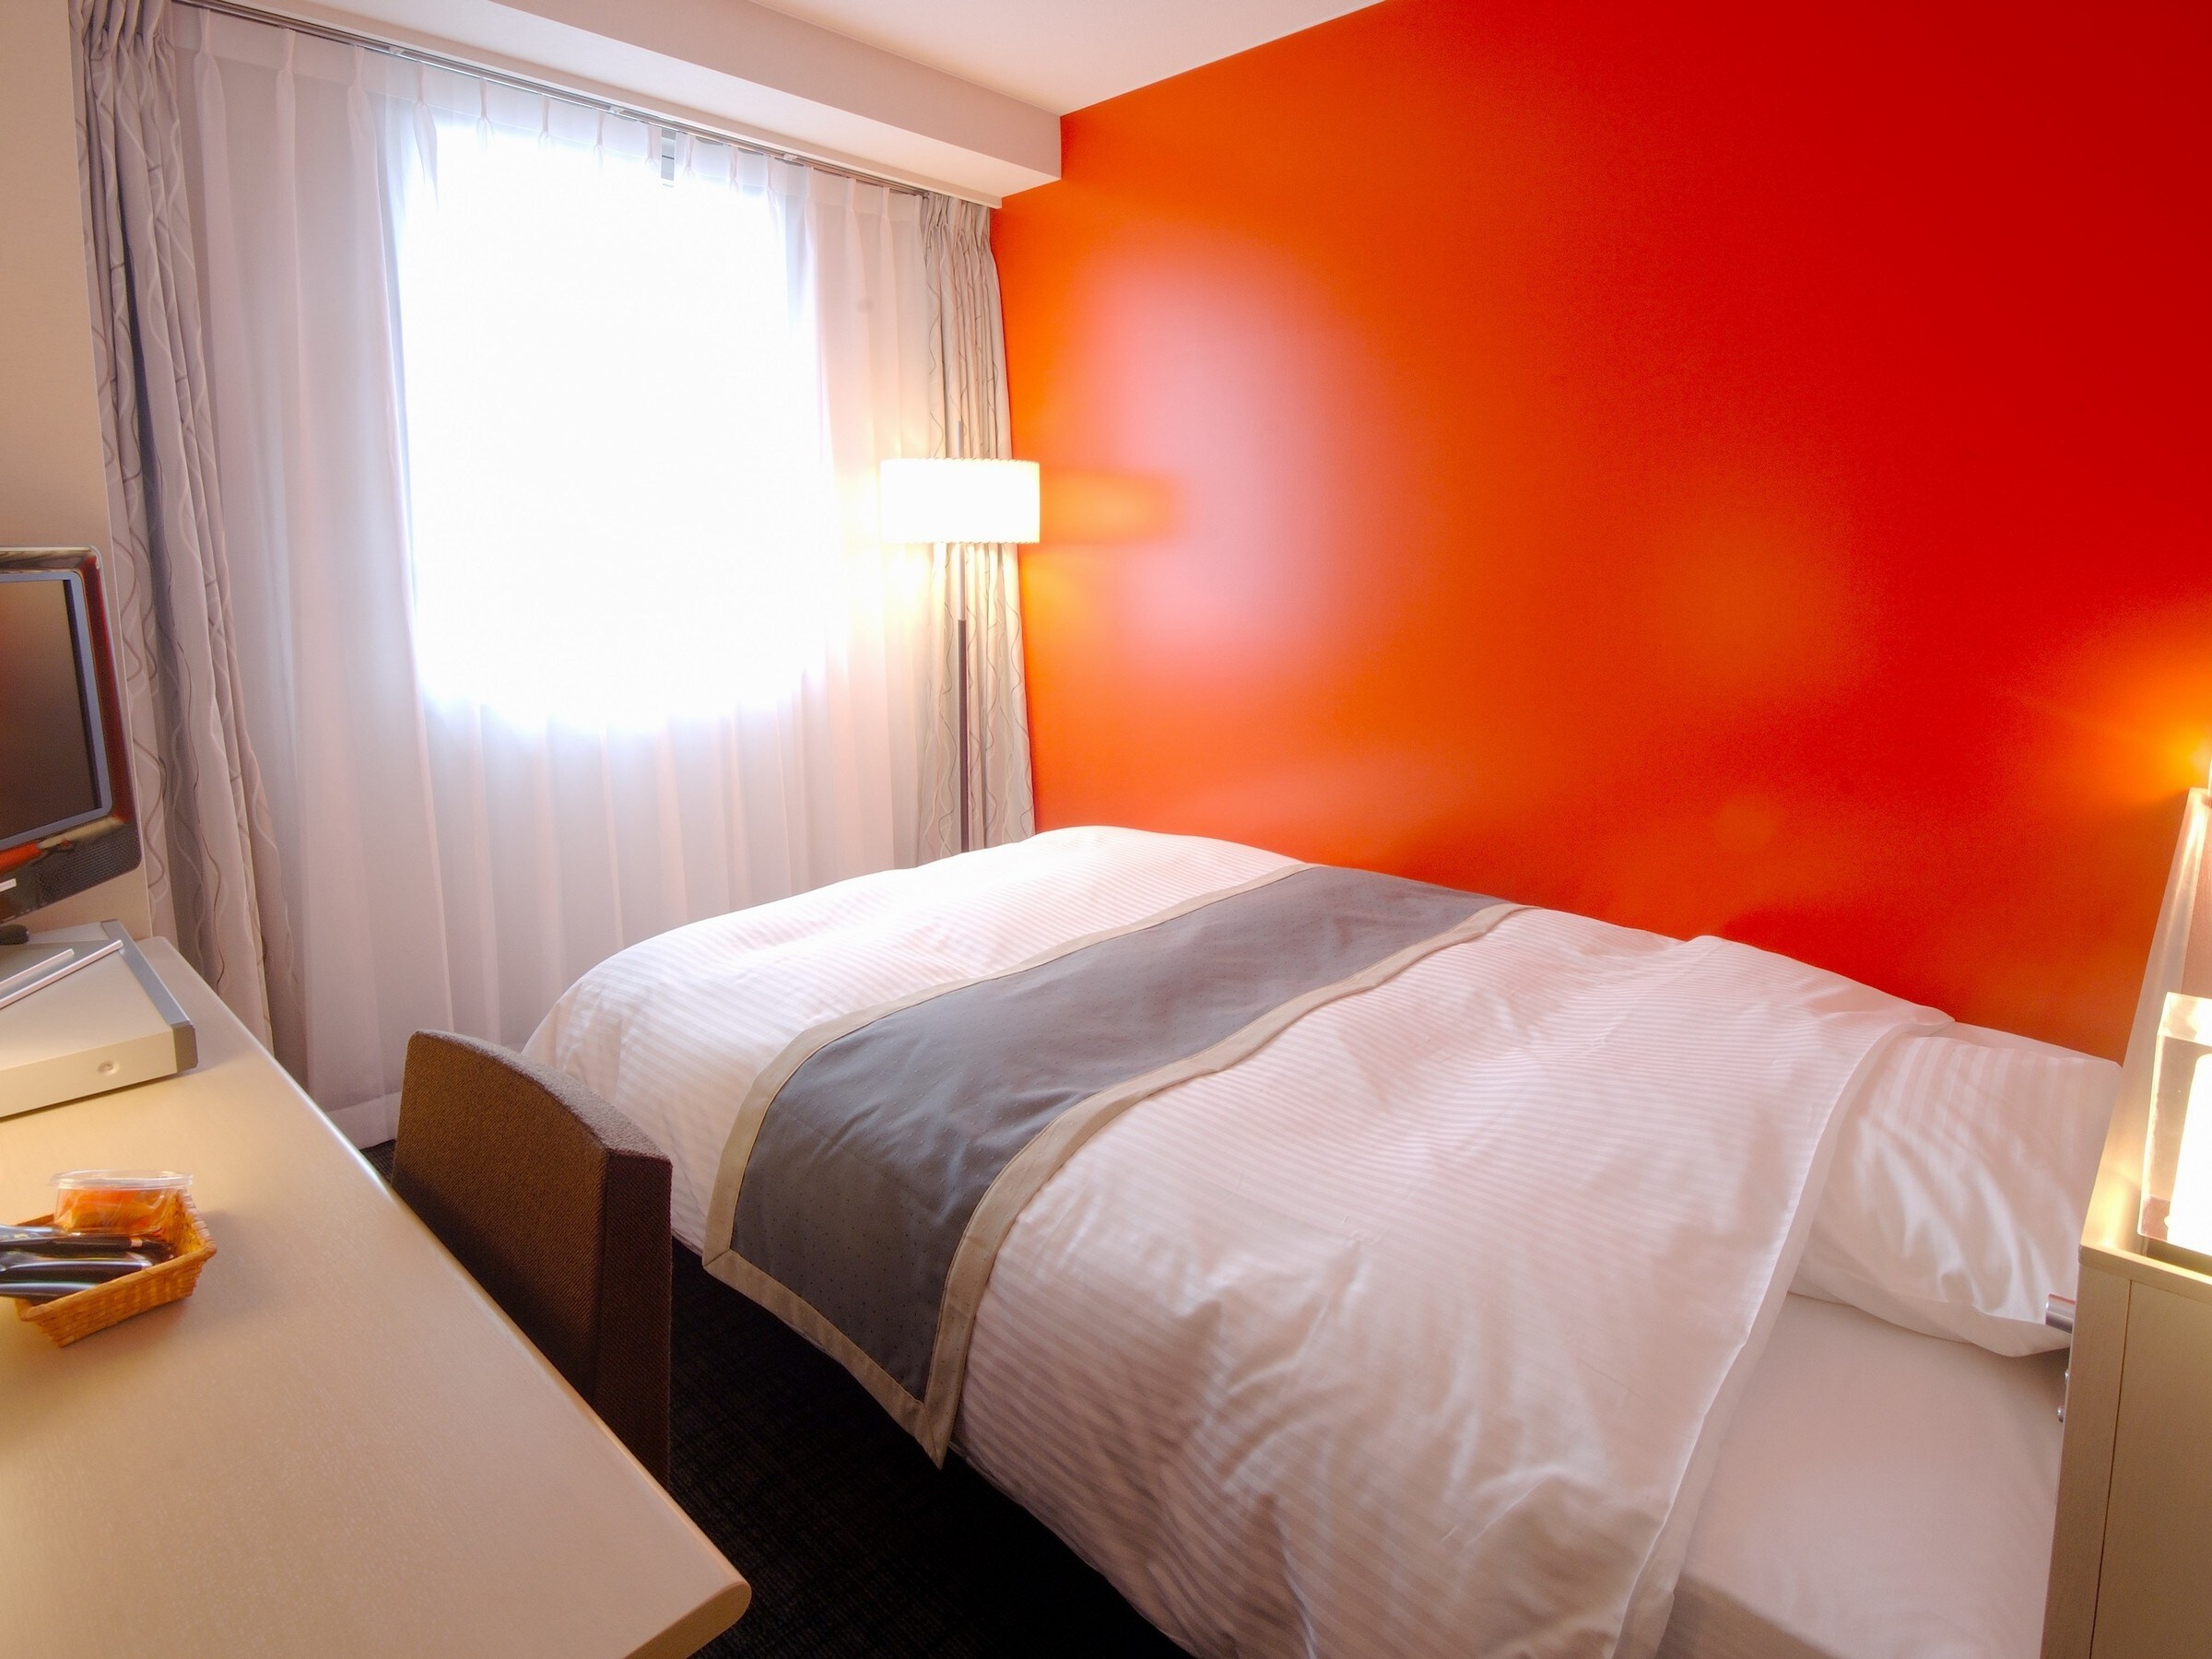 Room orange